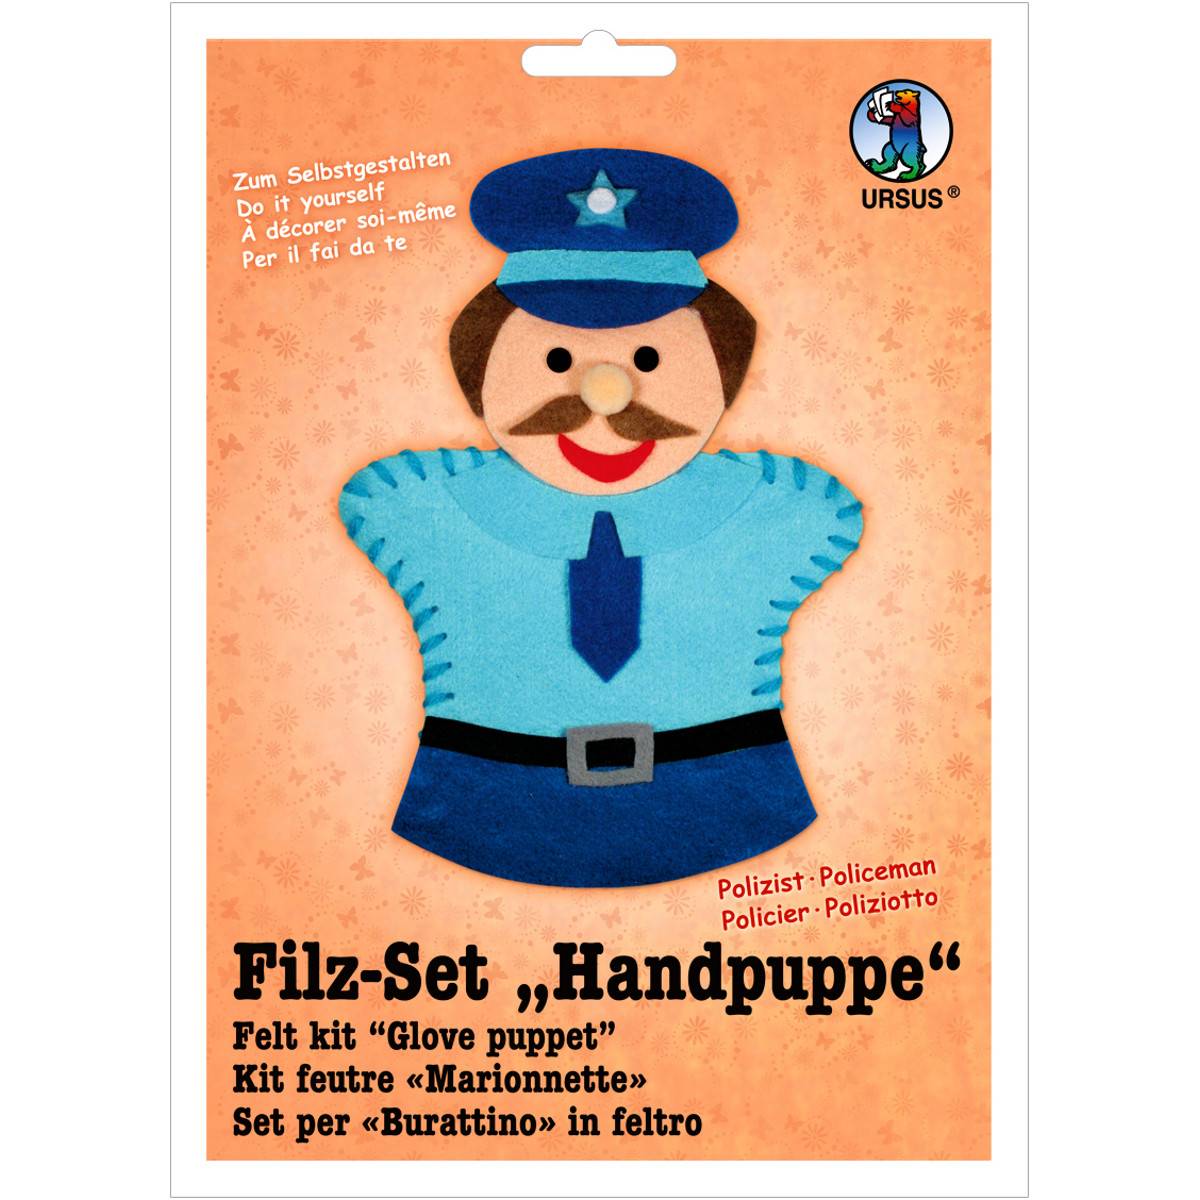 Filz-Set "Handpuppe" Polizist